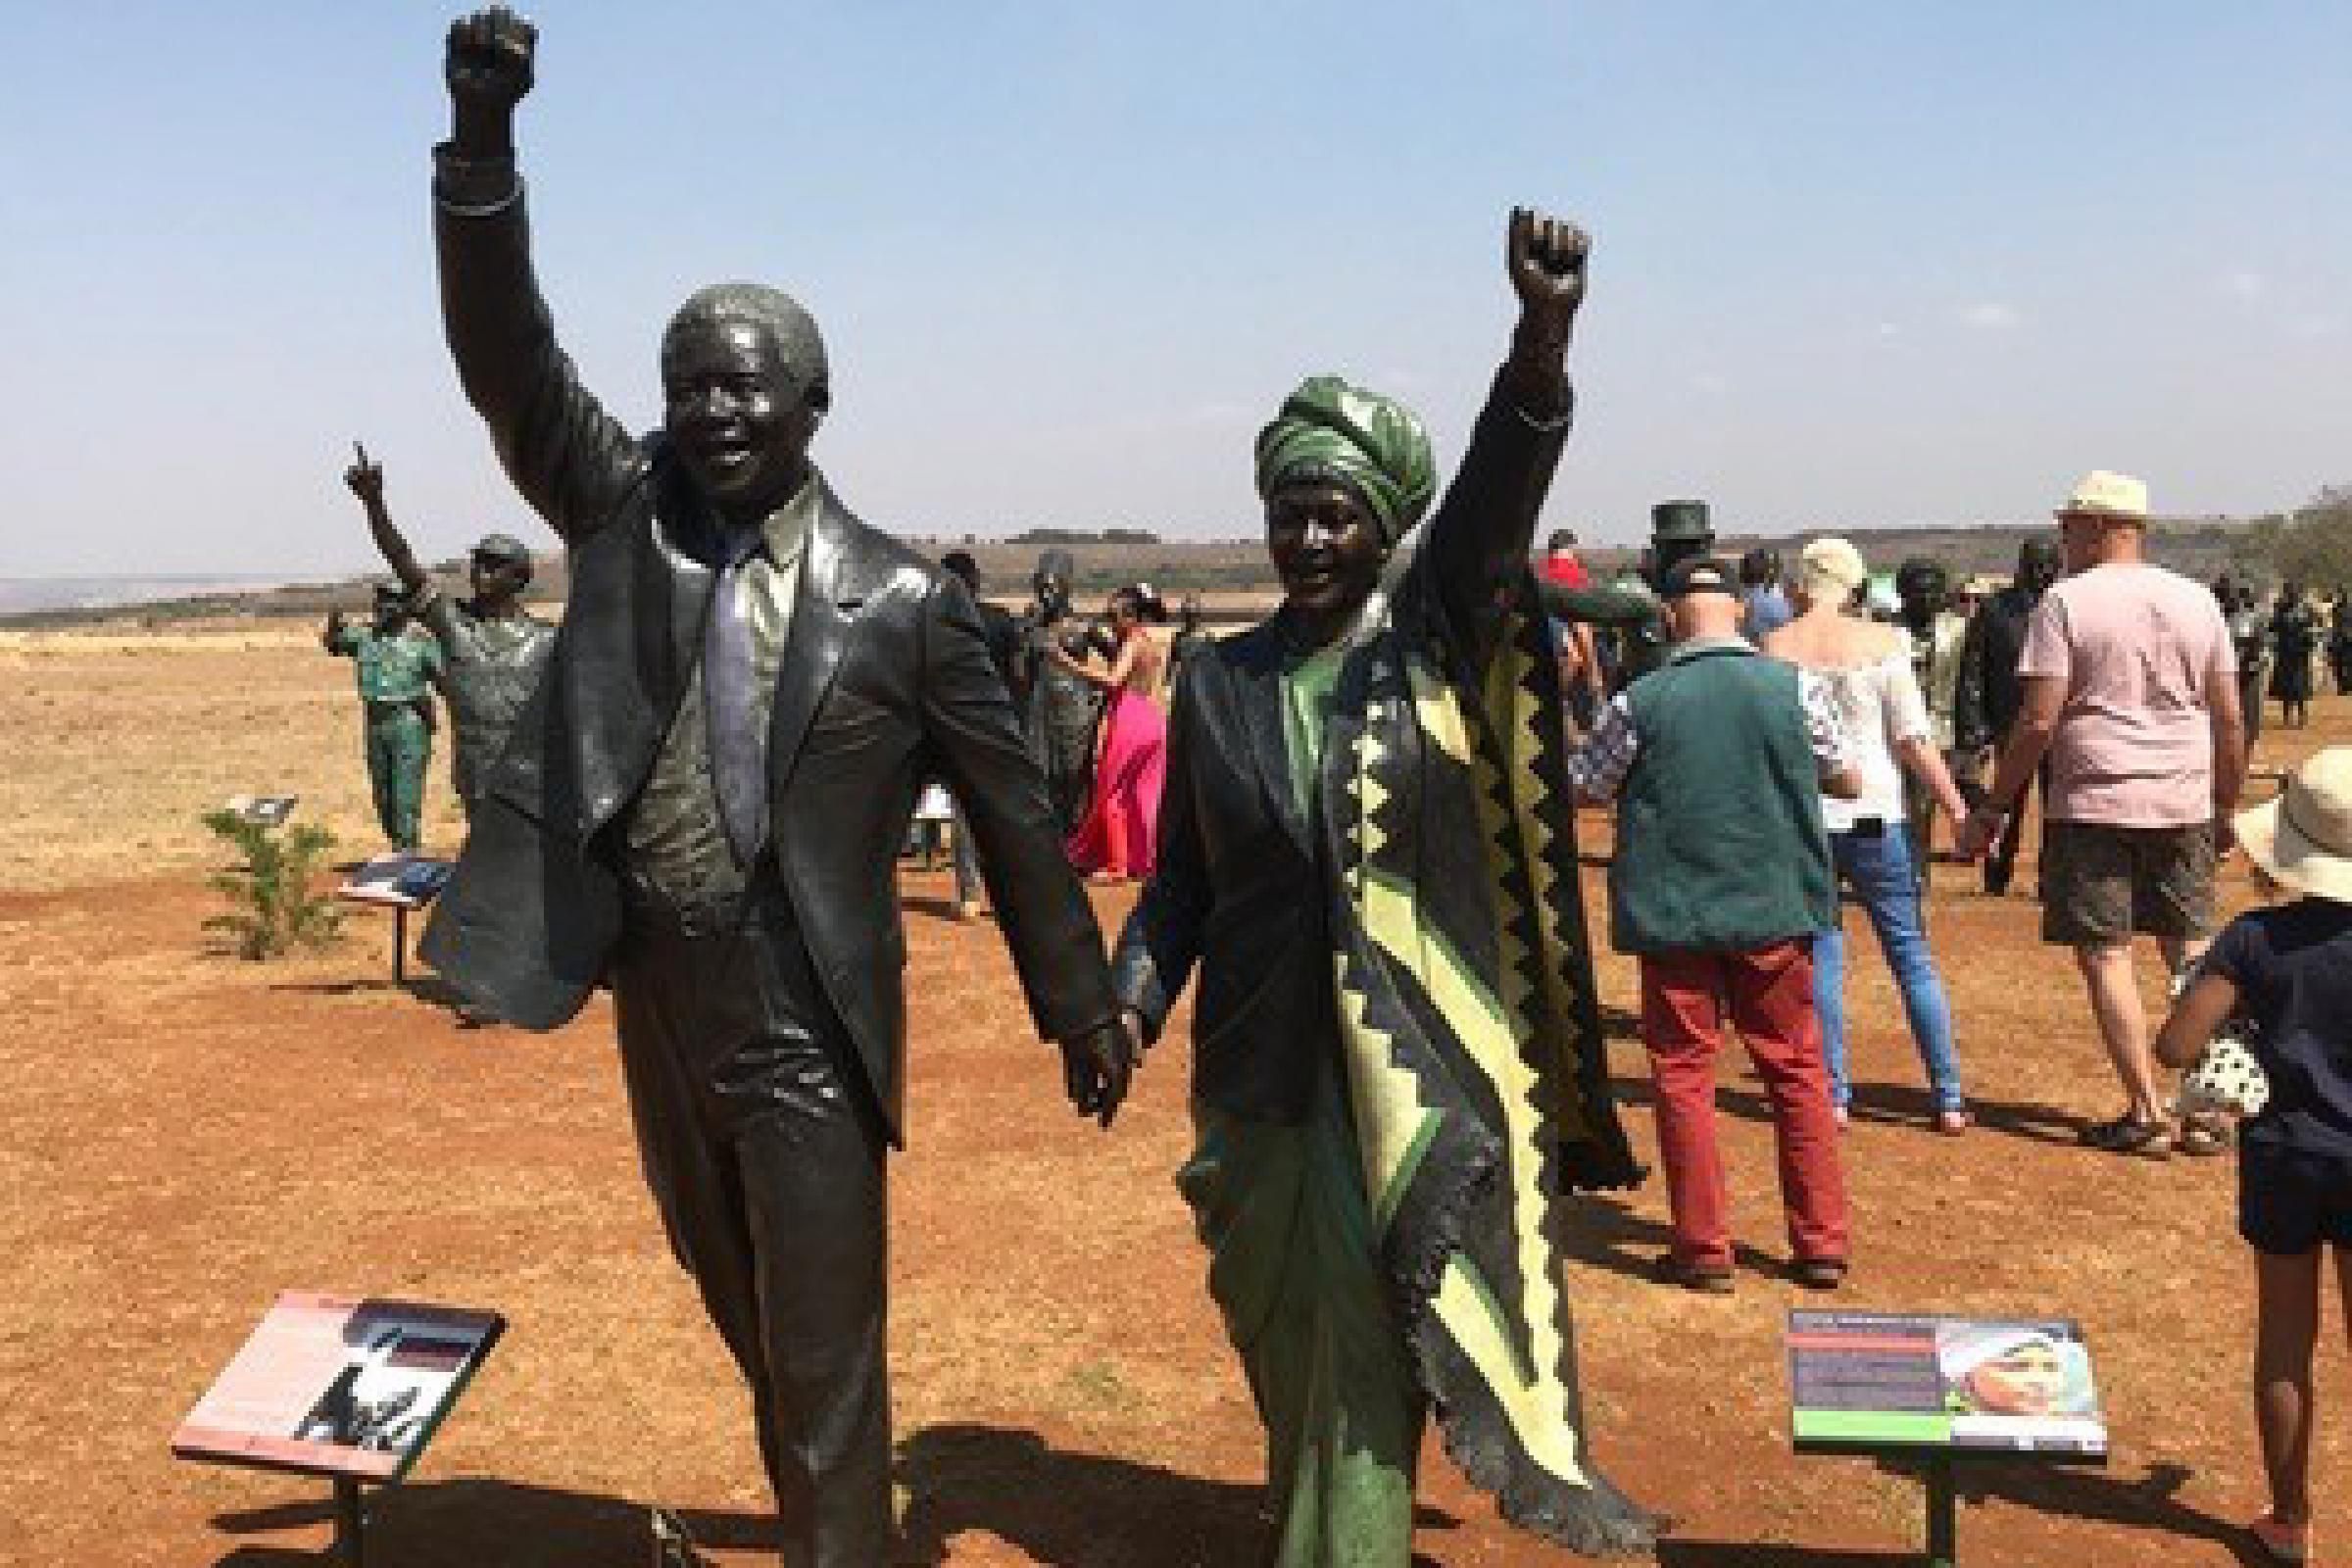 Statues of the Mandela family